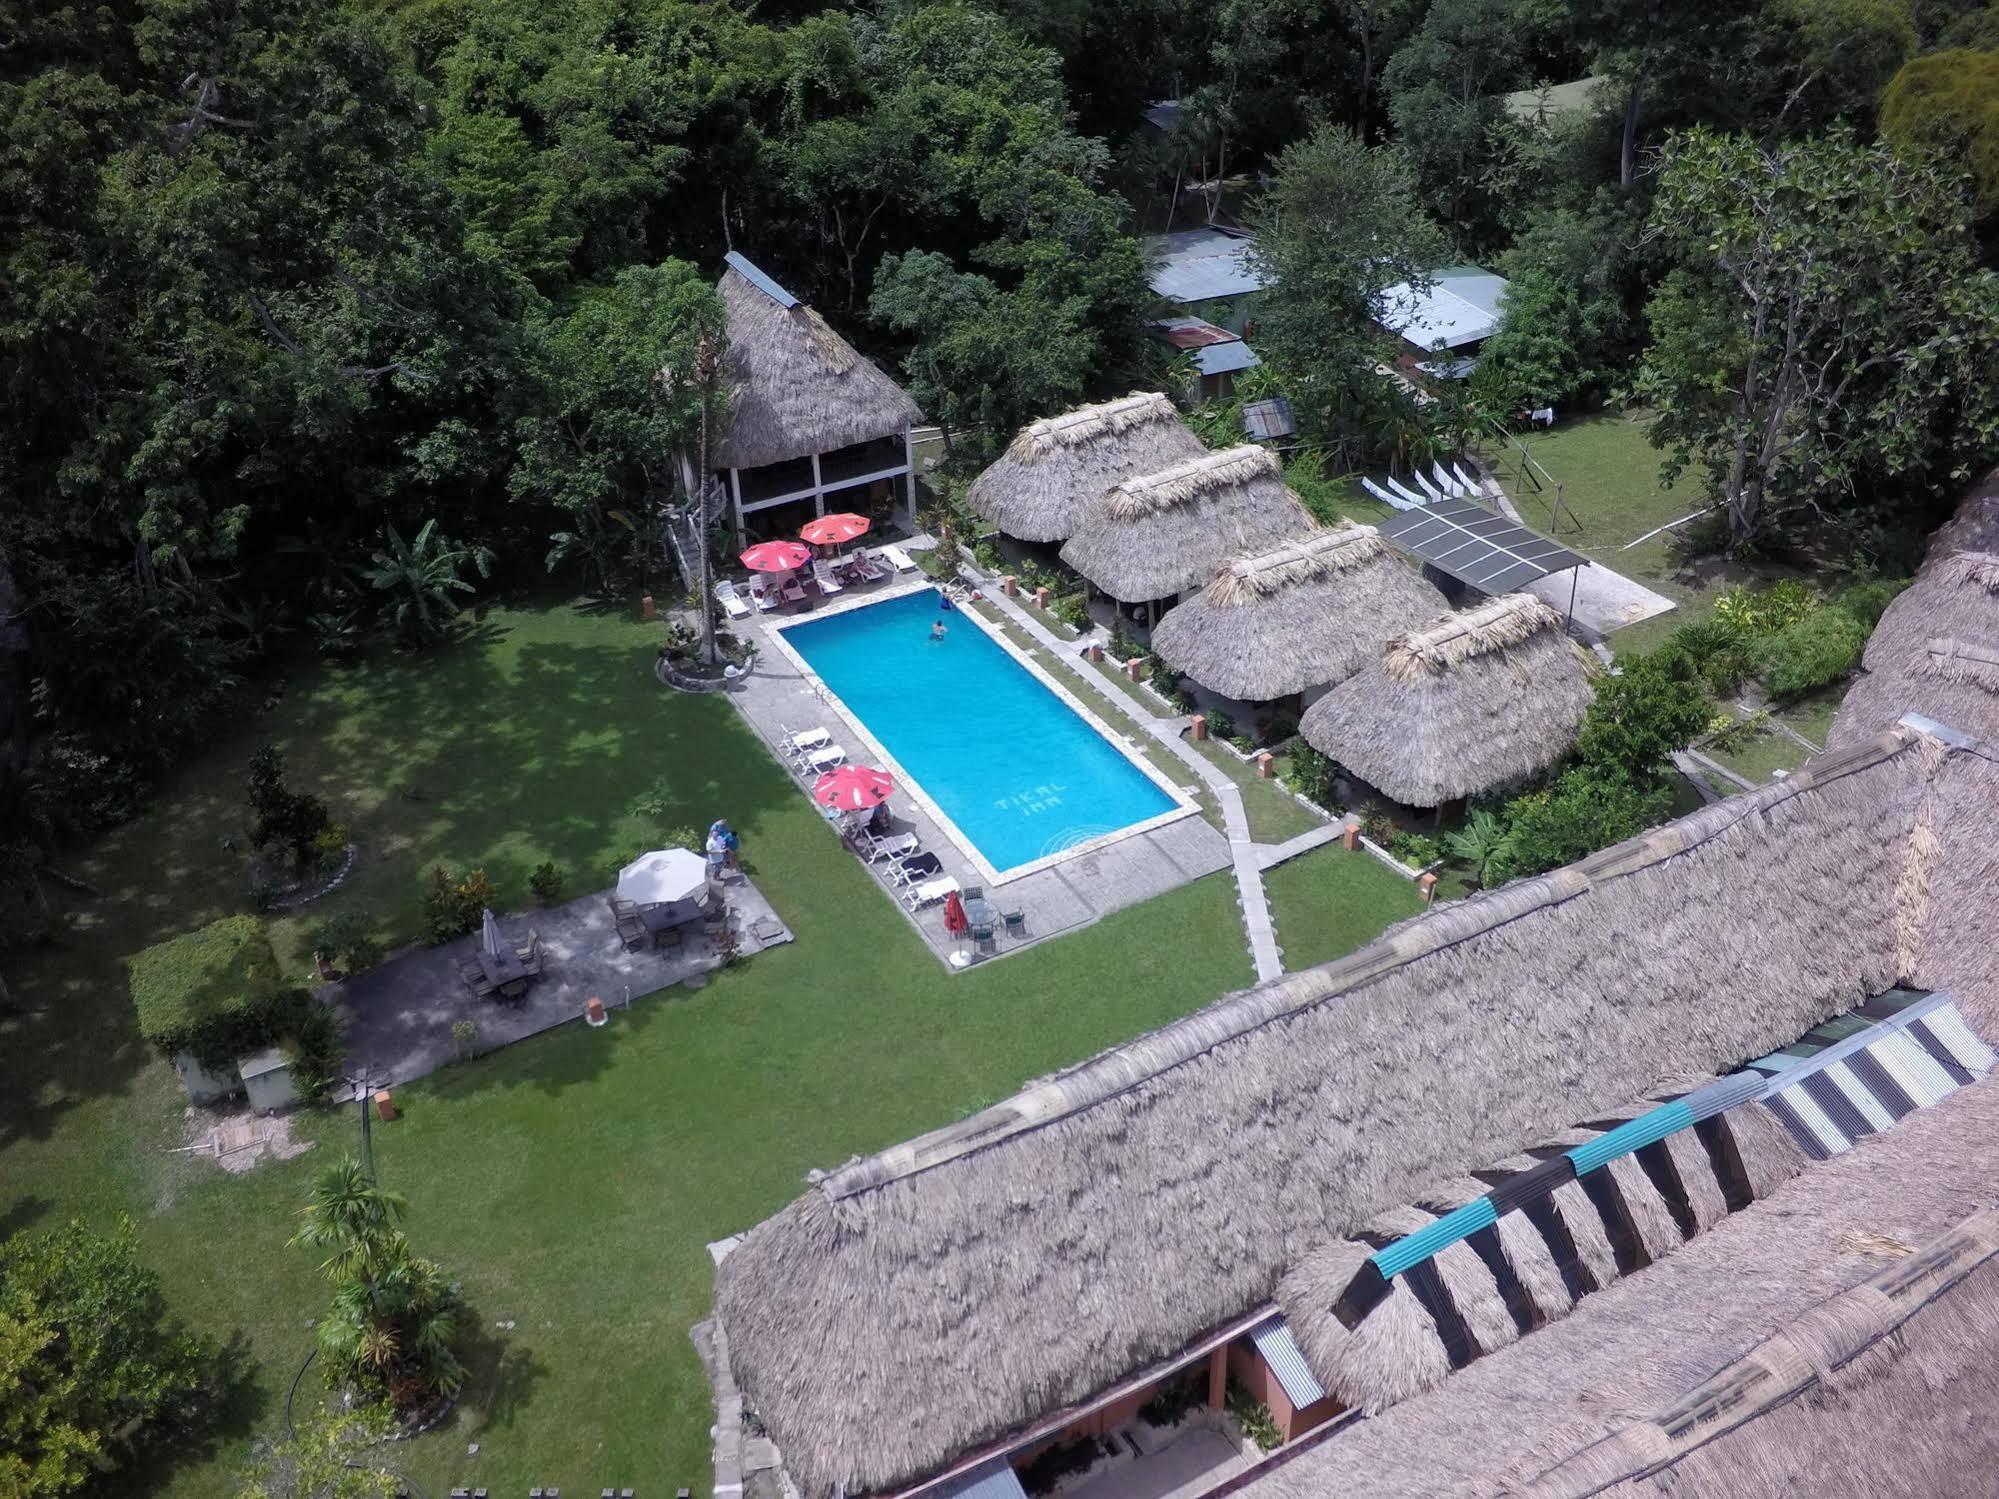 Tikal Inn